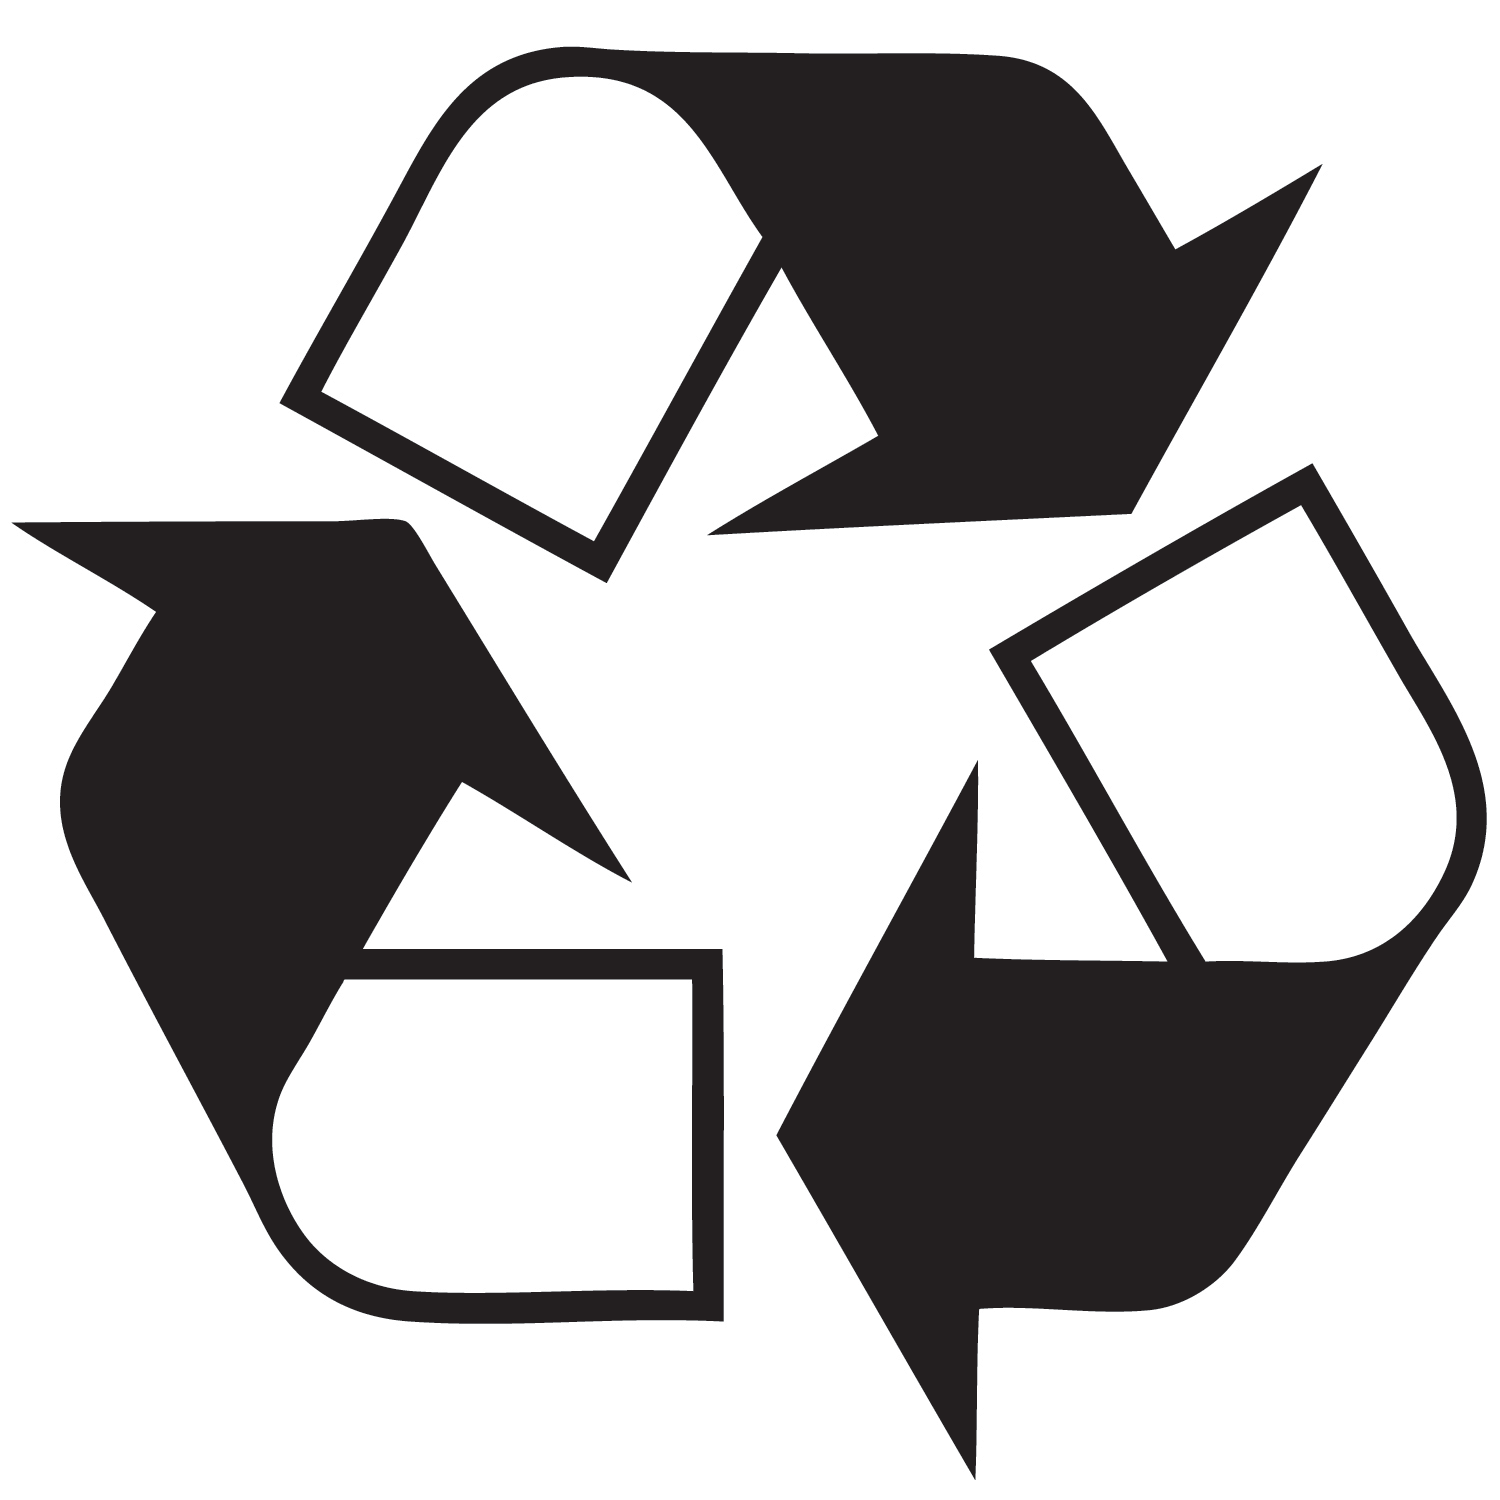 Clip art recycle symbol clipa